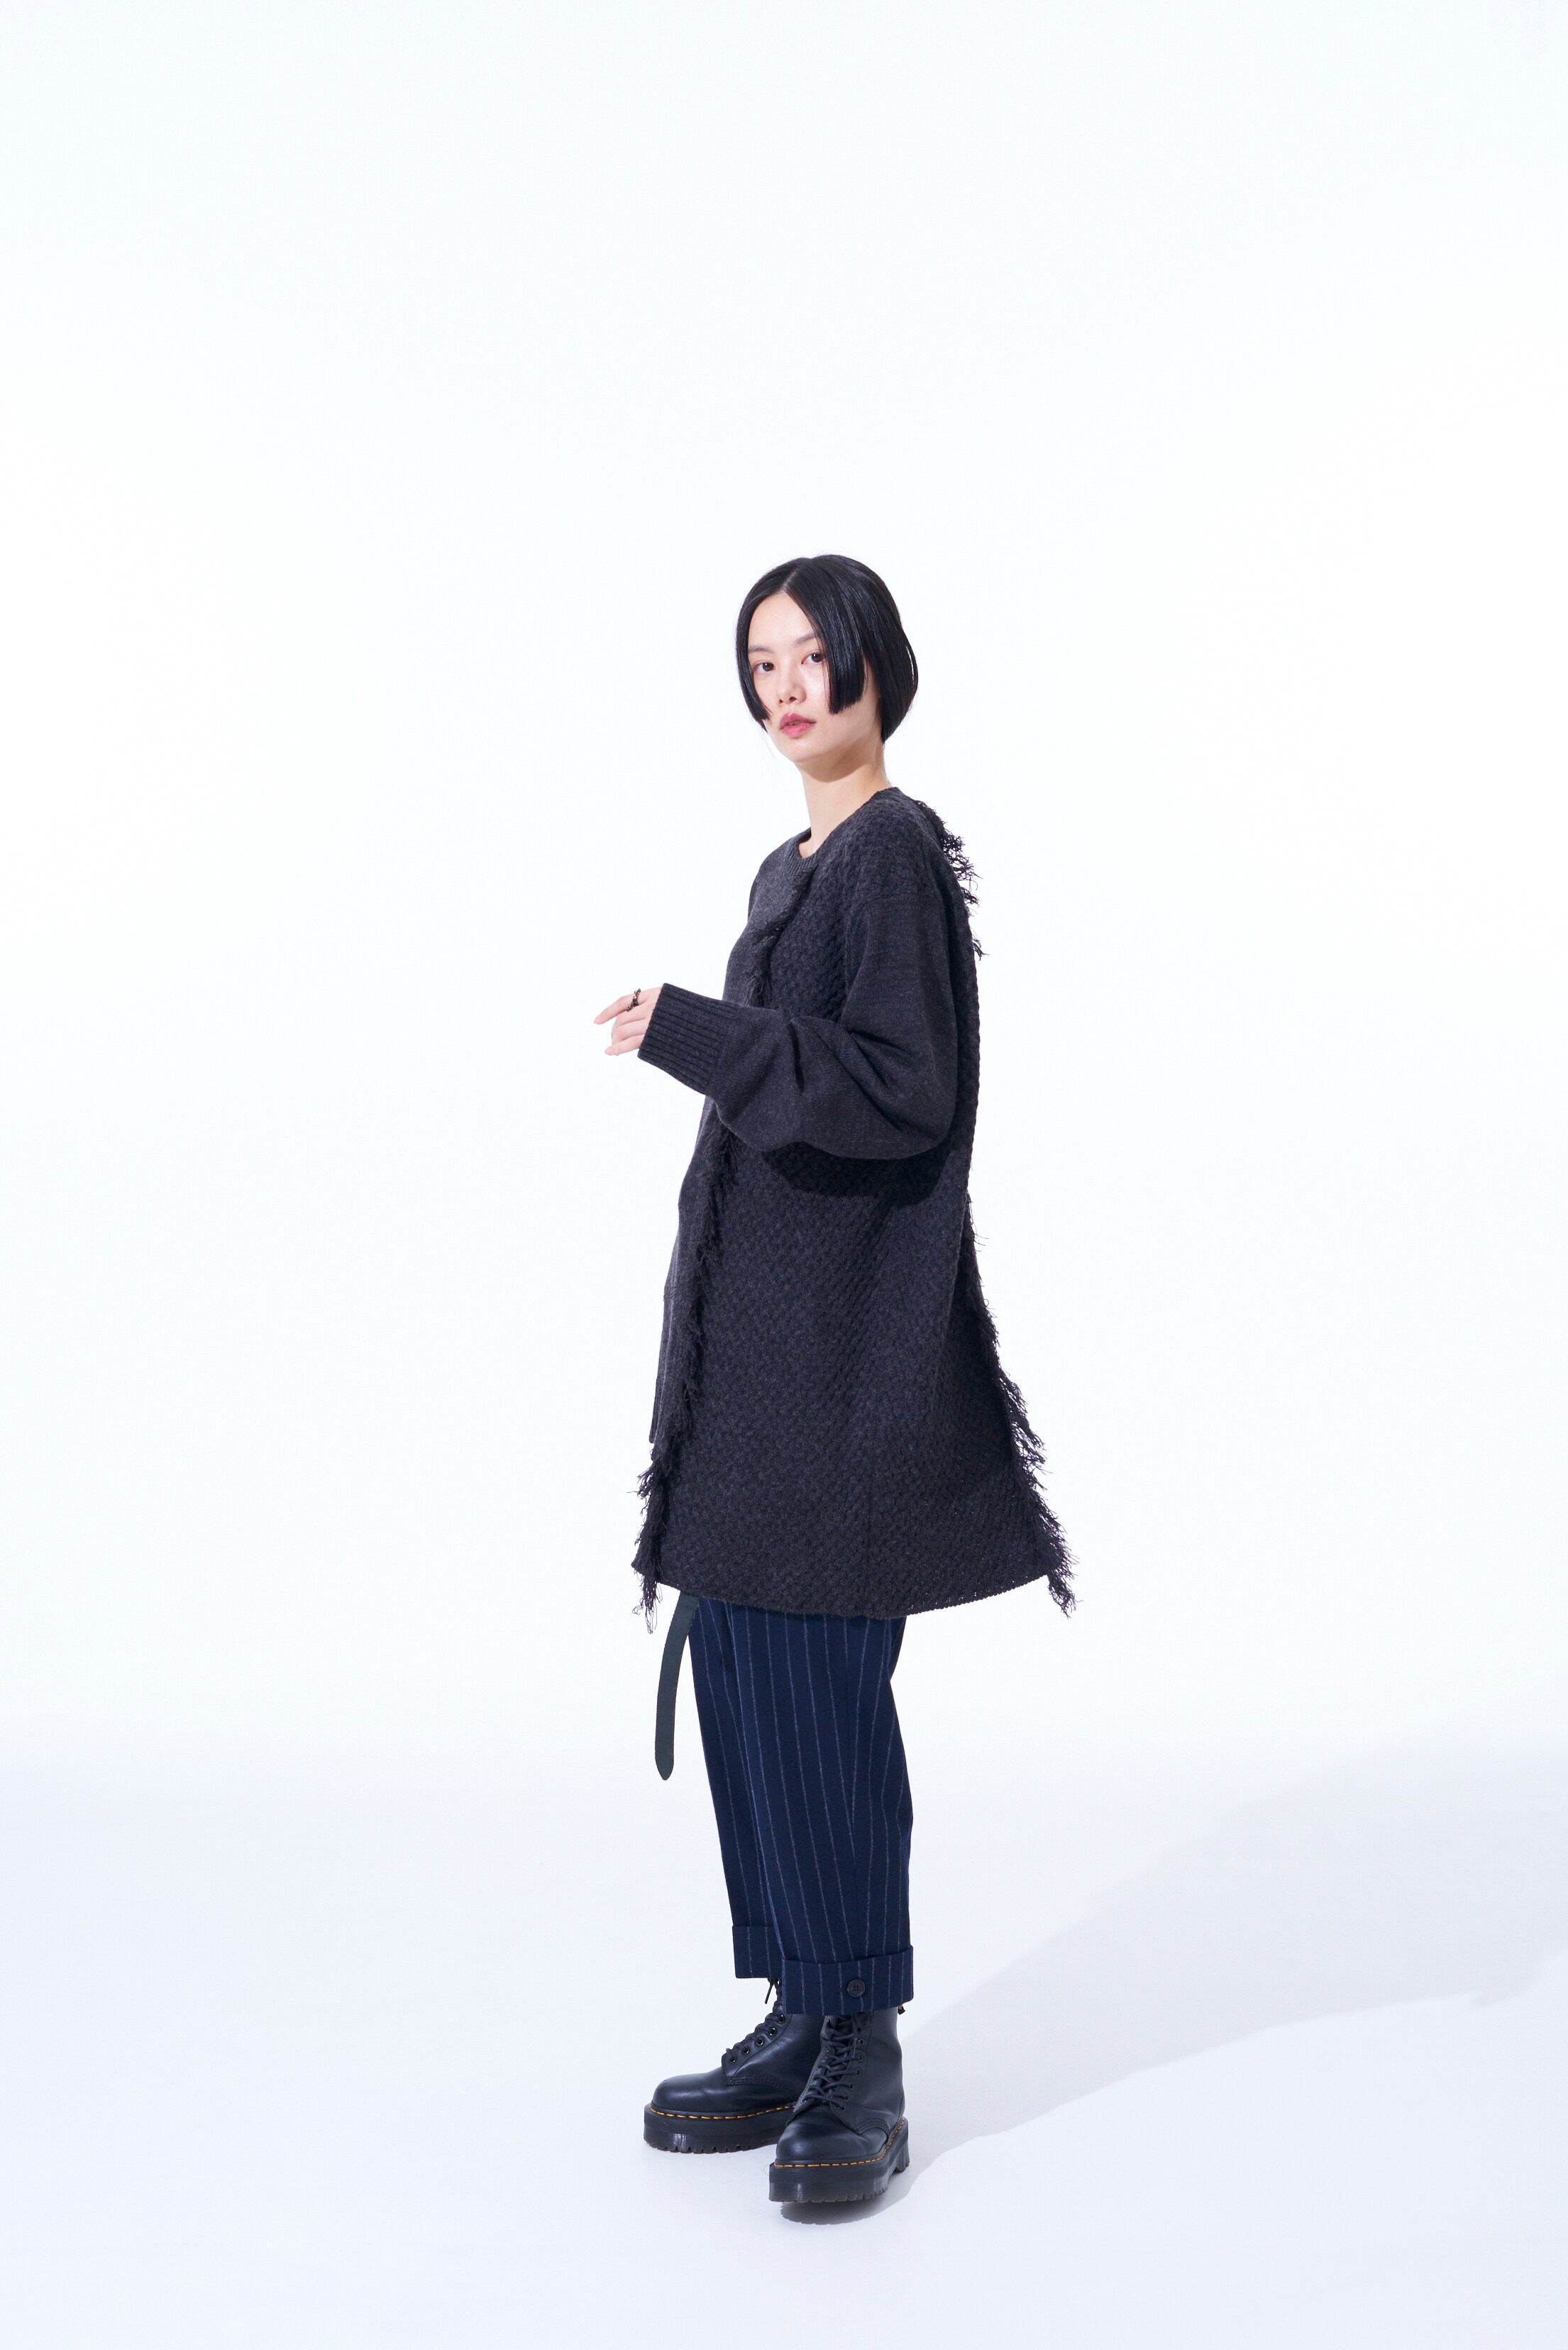 Yohji Yamamoto NOIR Stitch Design Asymmetrical Jacket Black 2